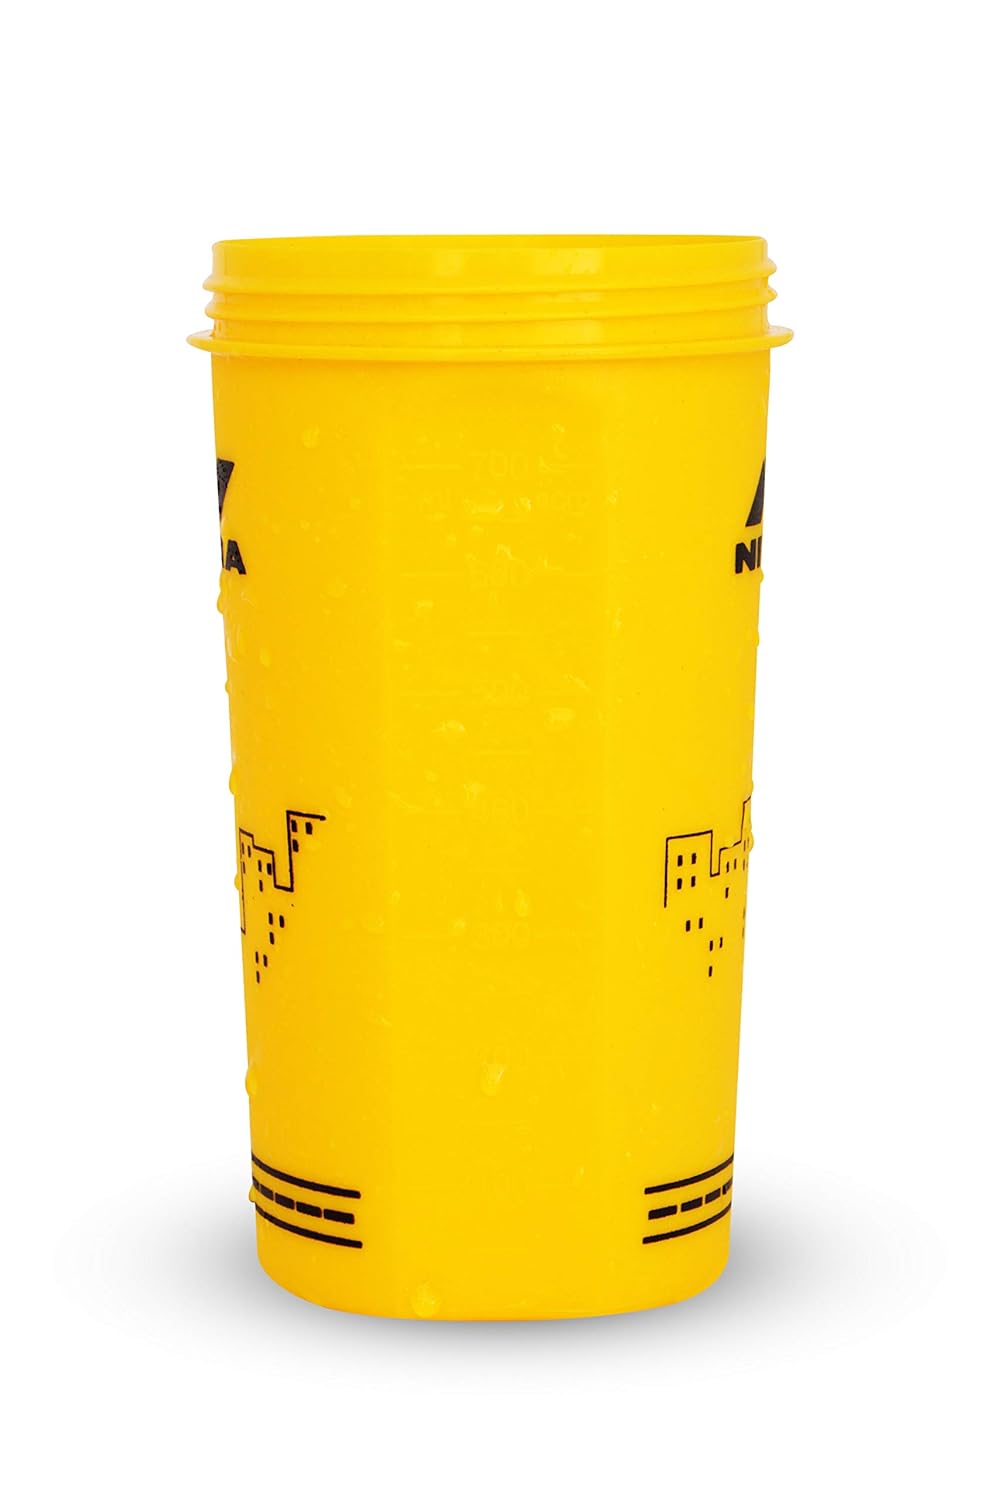 Nivia Street Sports 750 ml Shaker, Plastic, Yellow